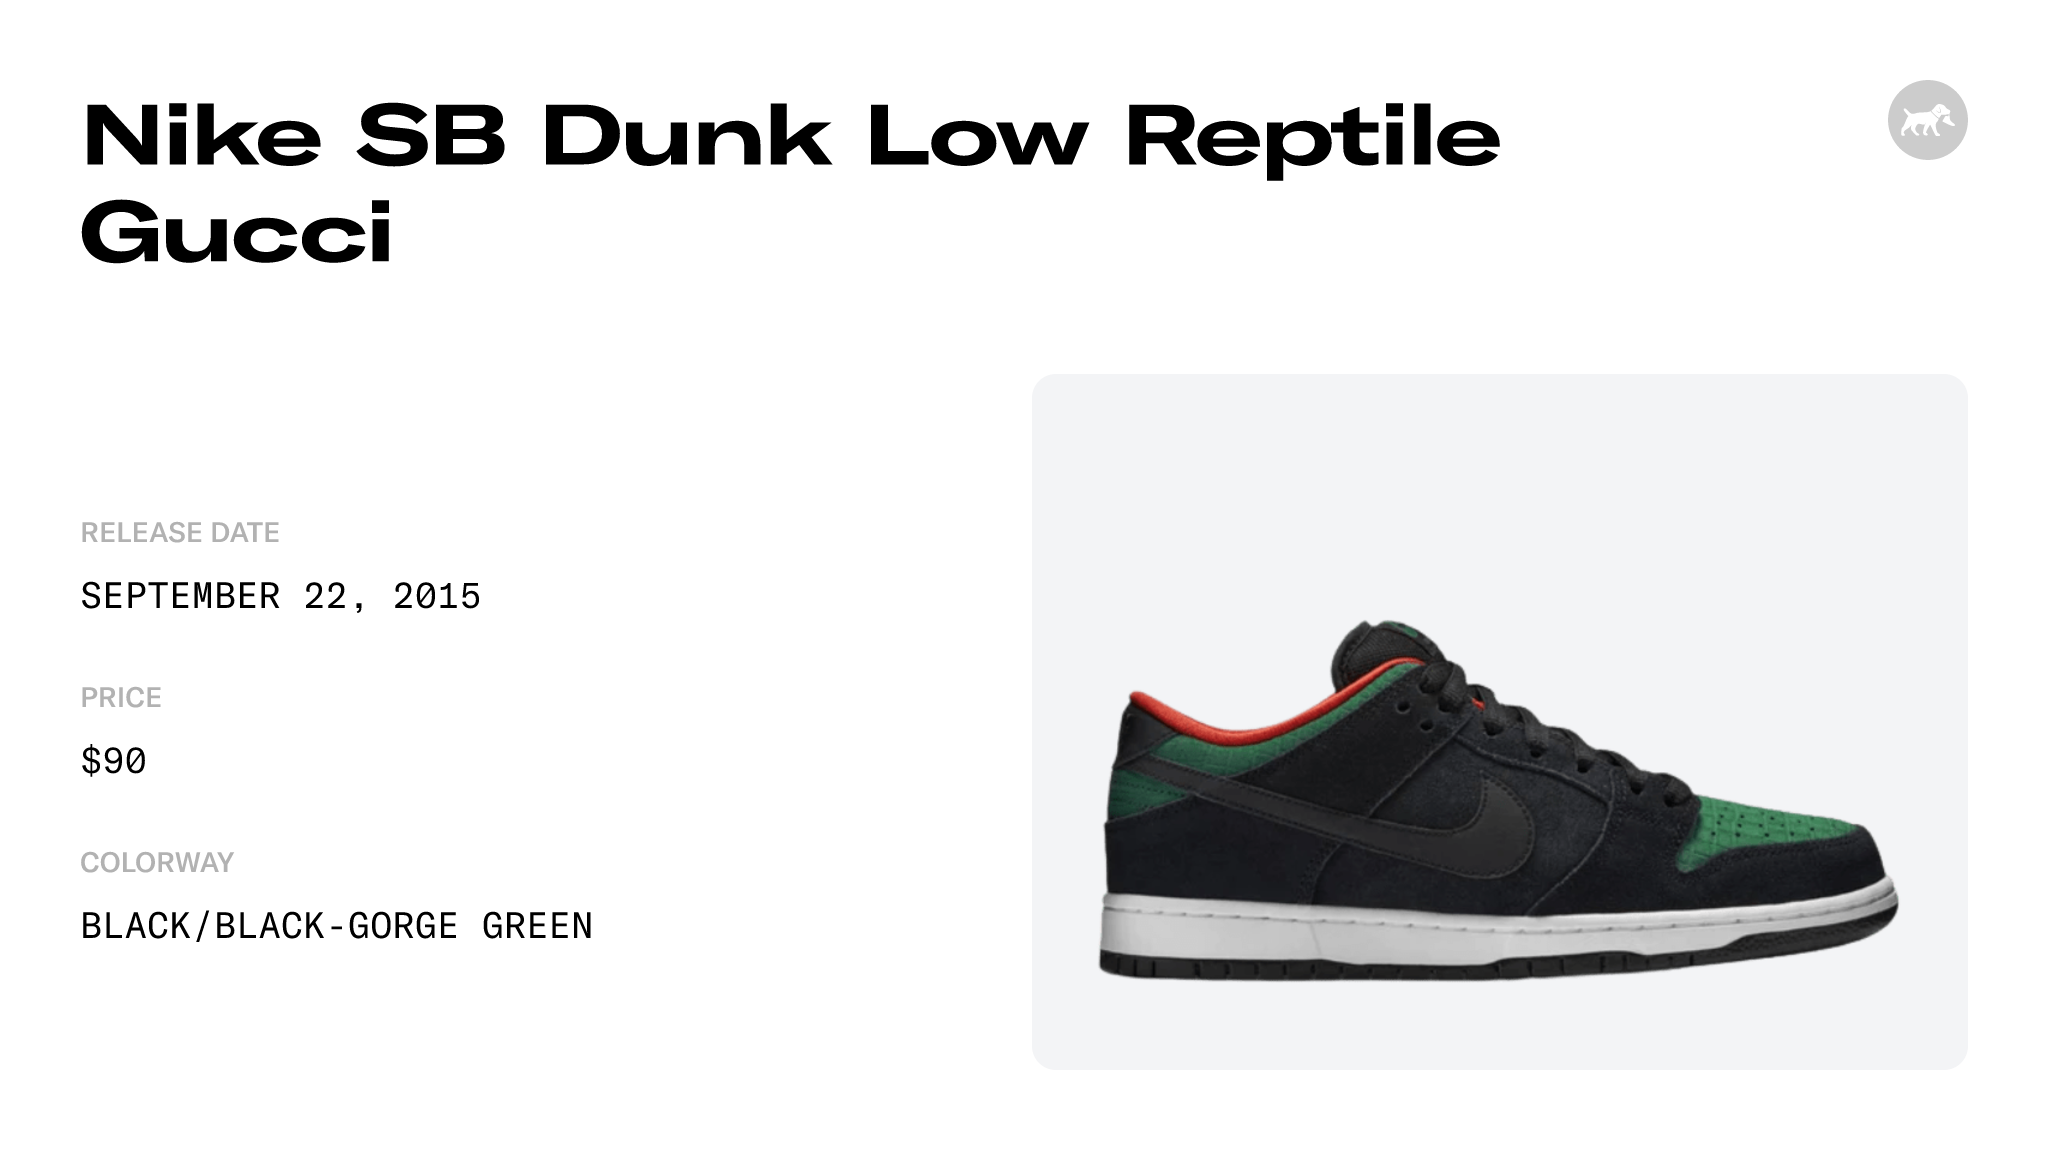 Nike SB Dunk Low Reptile Gucci - 304292-055 Raffles and